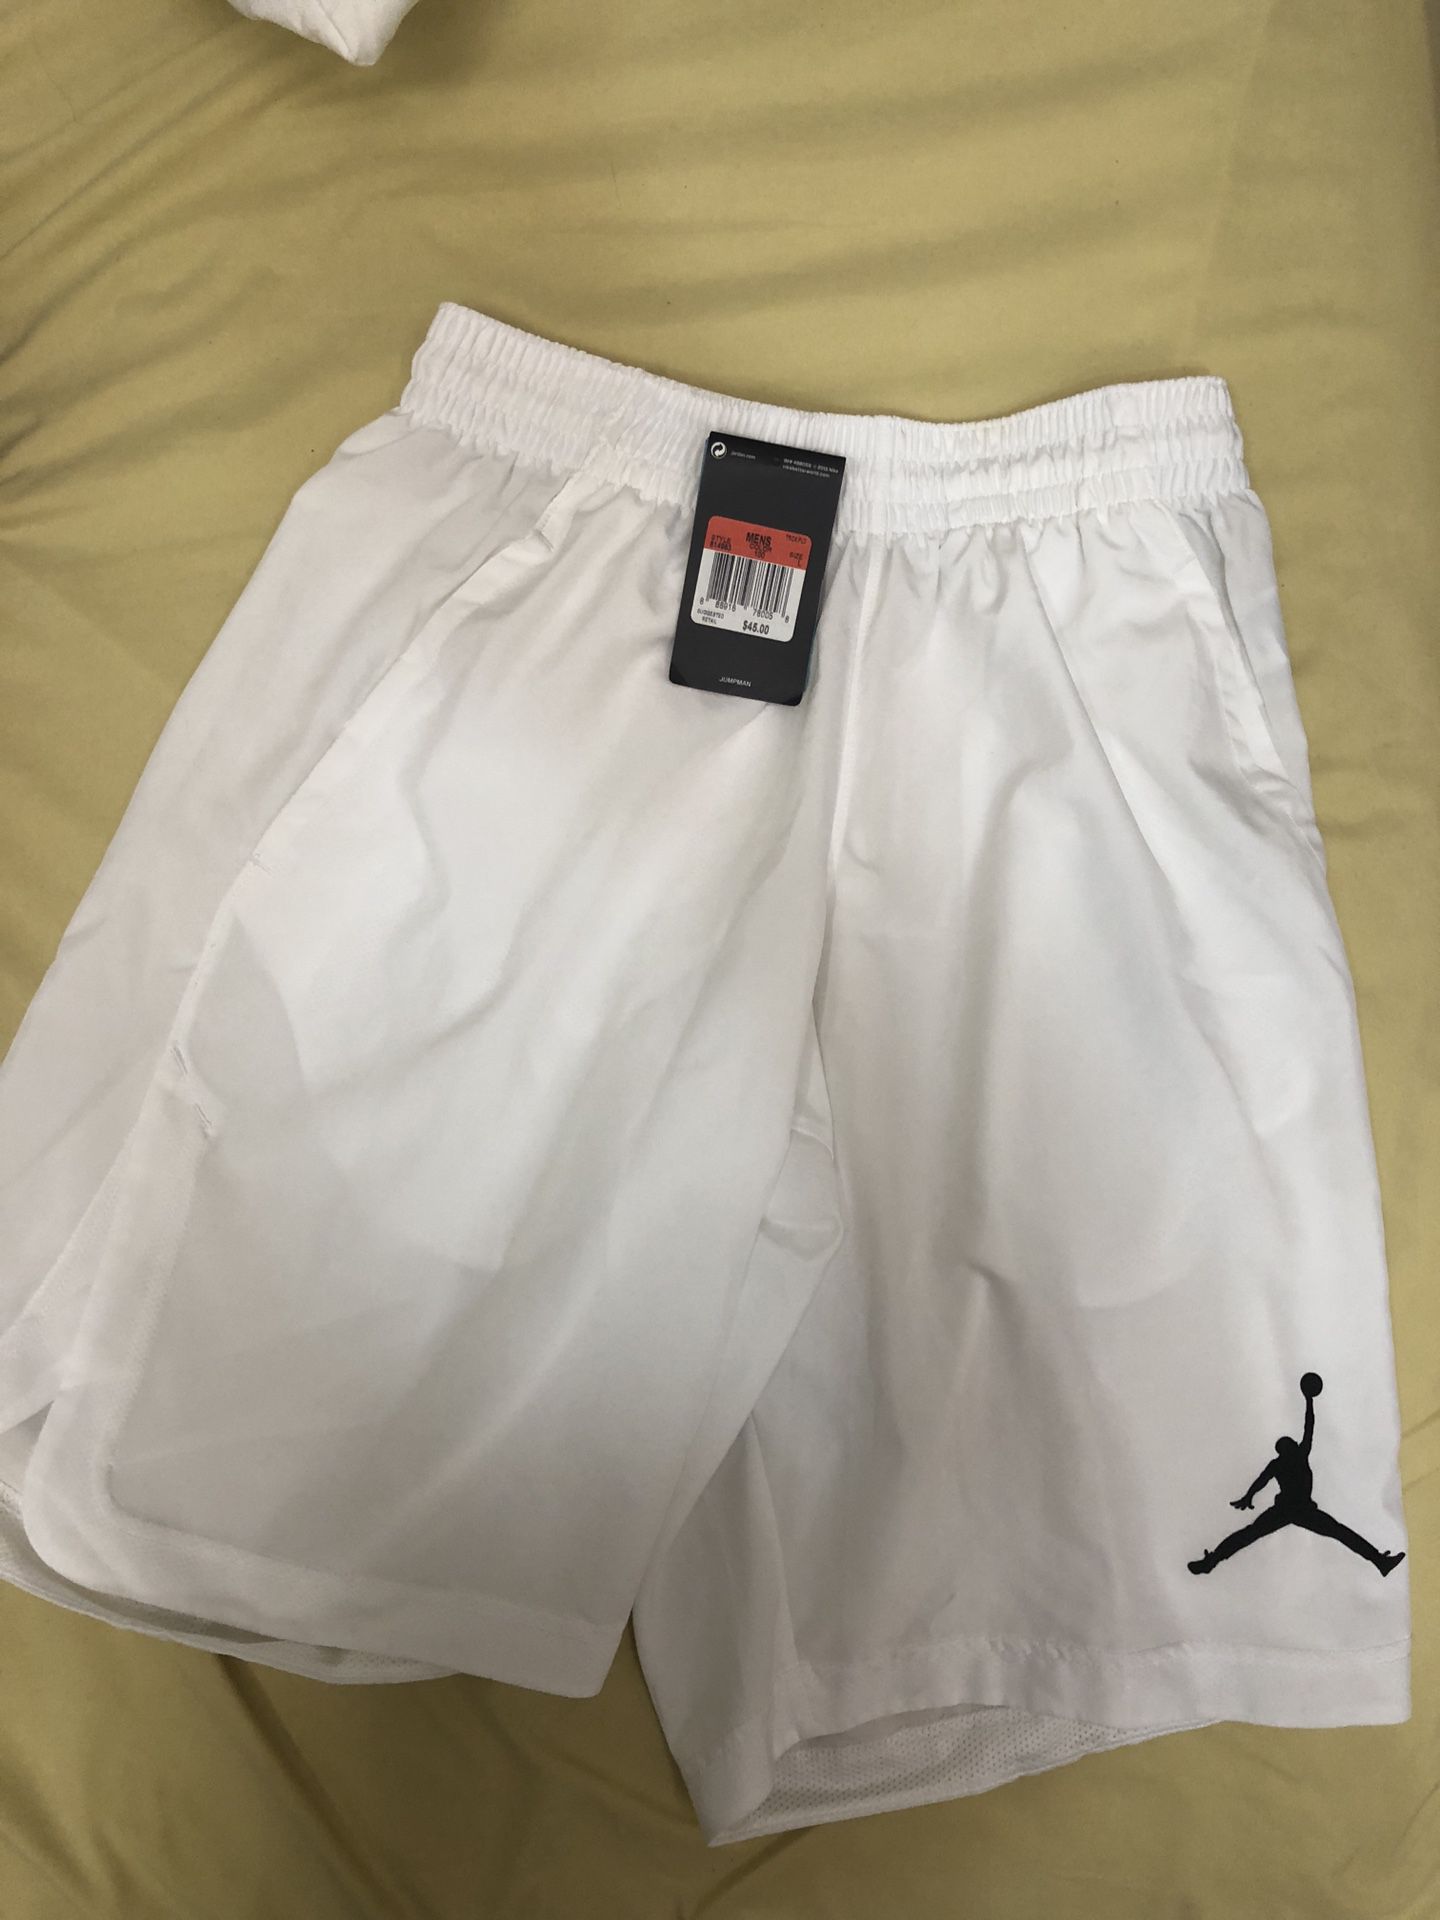 Jordan shorts Sz large